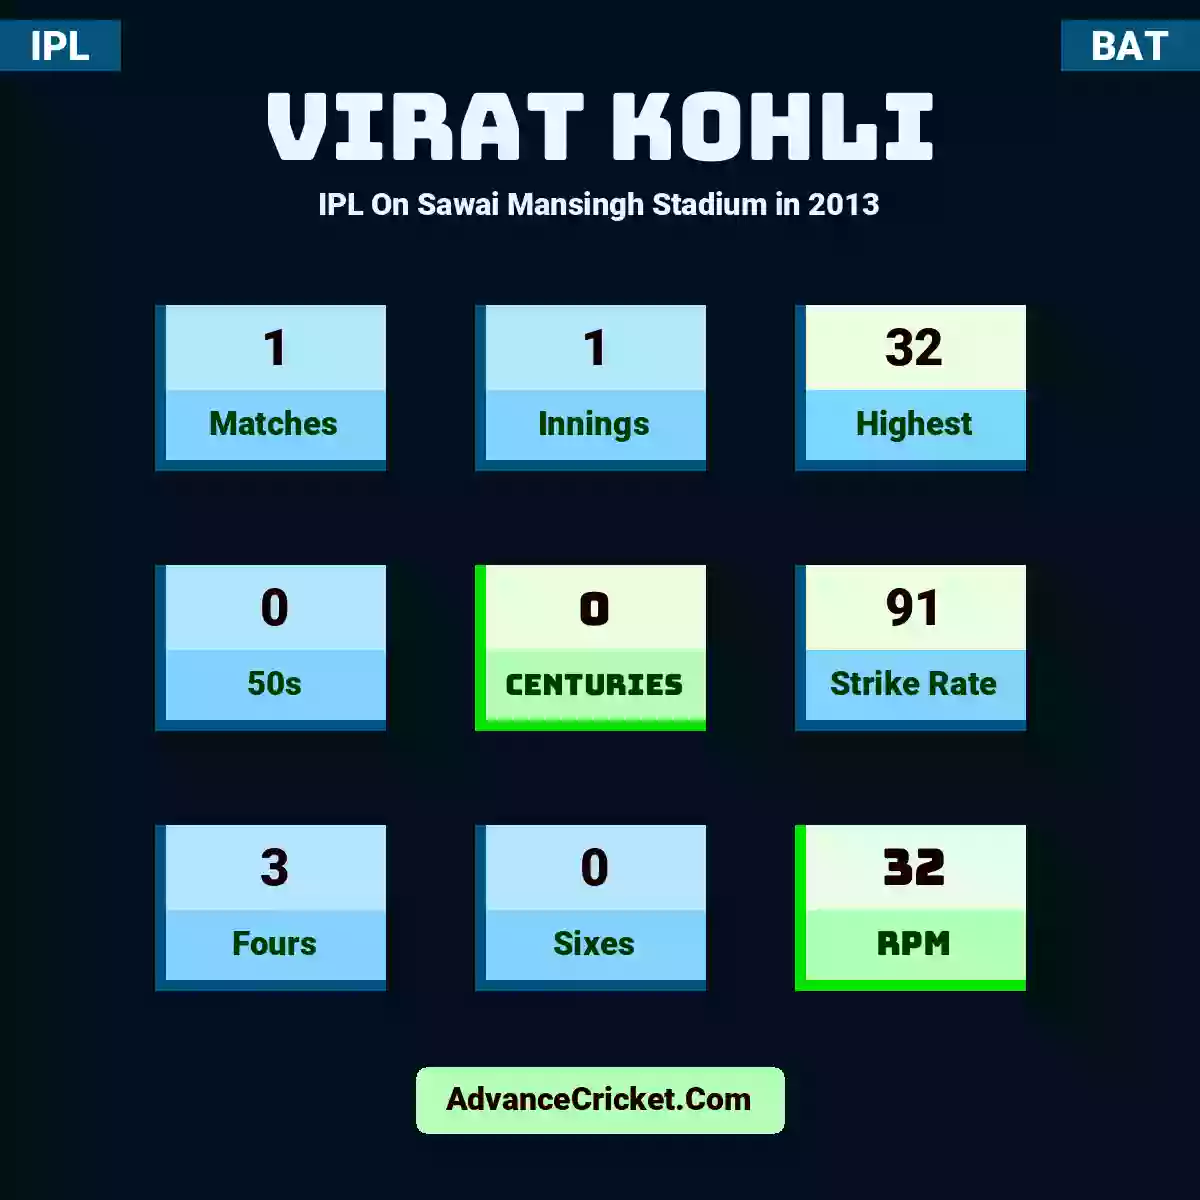 Virat Kohli IPL  On Sawai Mansingh Stadium in 2013, Virat Kohli played 1 matches, scored 32 runs as highest, 0 half-centuries, and 0 centuries, with a strike rate of 91. V.Kohli hit 3 fours and 0 sixes, with an RPM of 32.